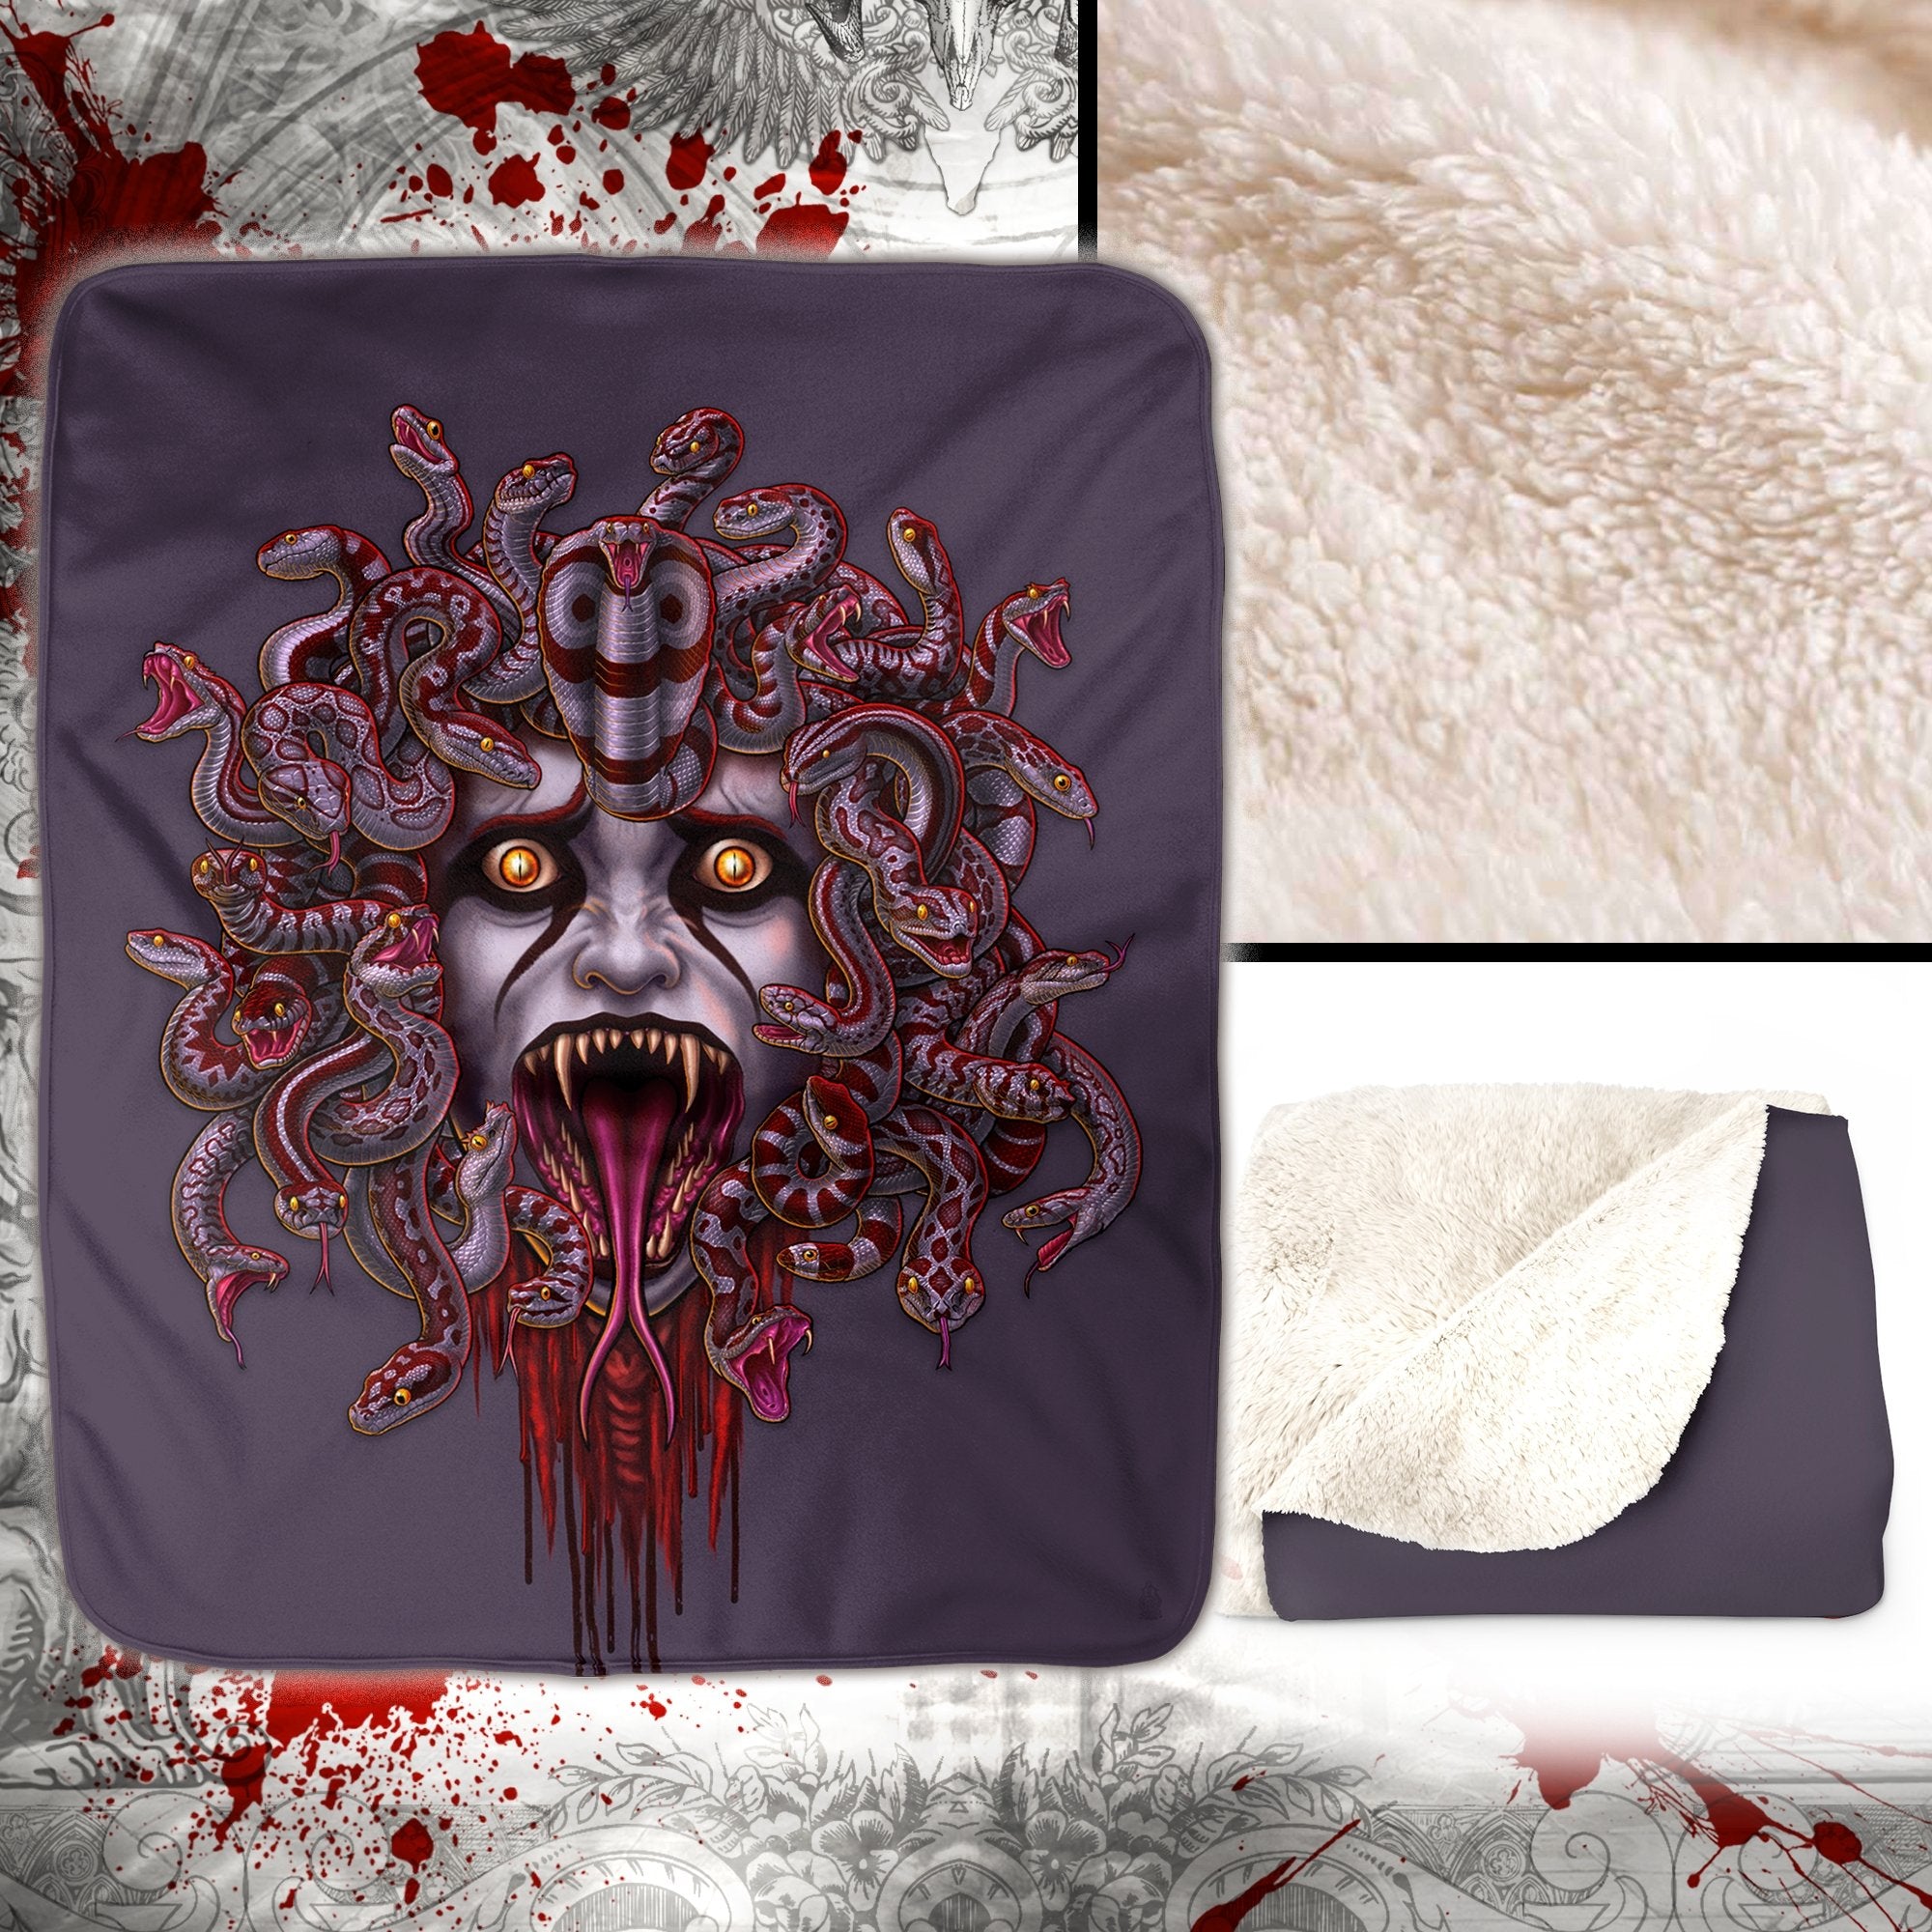 Medusa Throw Fleece Blanket, Alternative Horror Decor, Goth Art, Alternative Art Gift - Screaming, Blood Ash - Abysm Internal